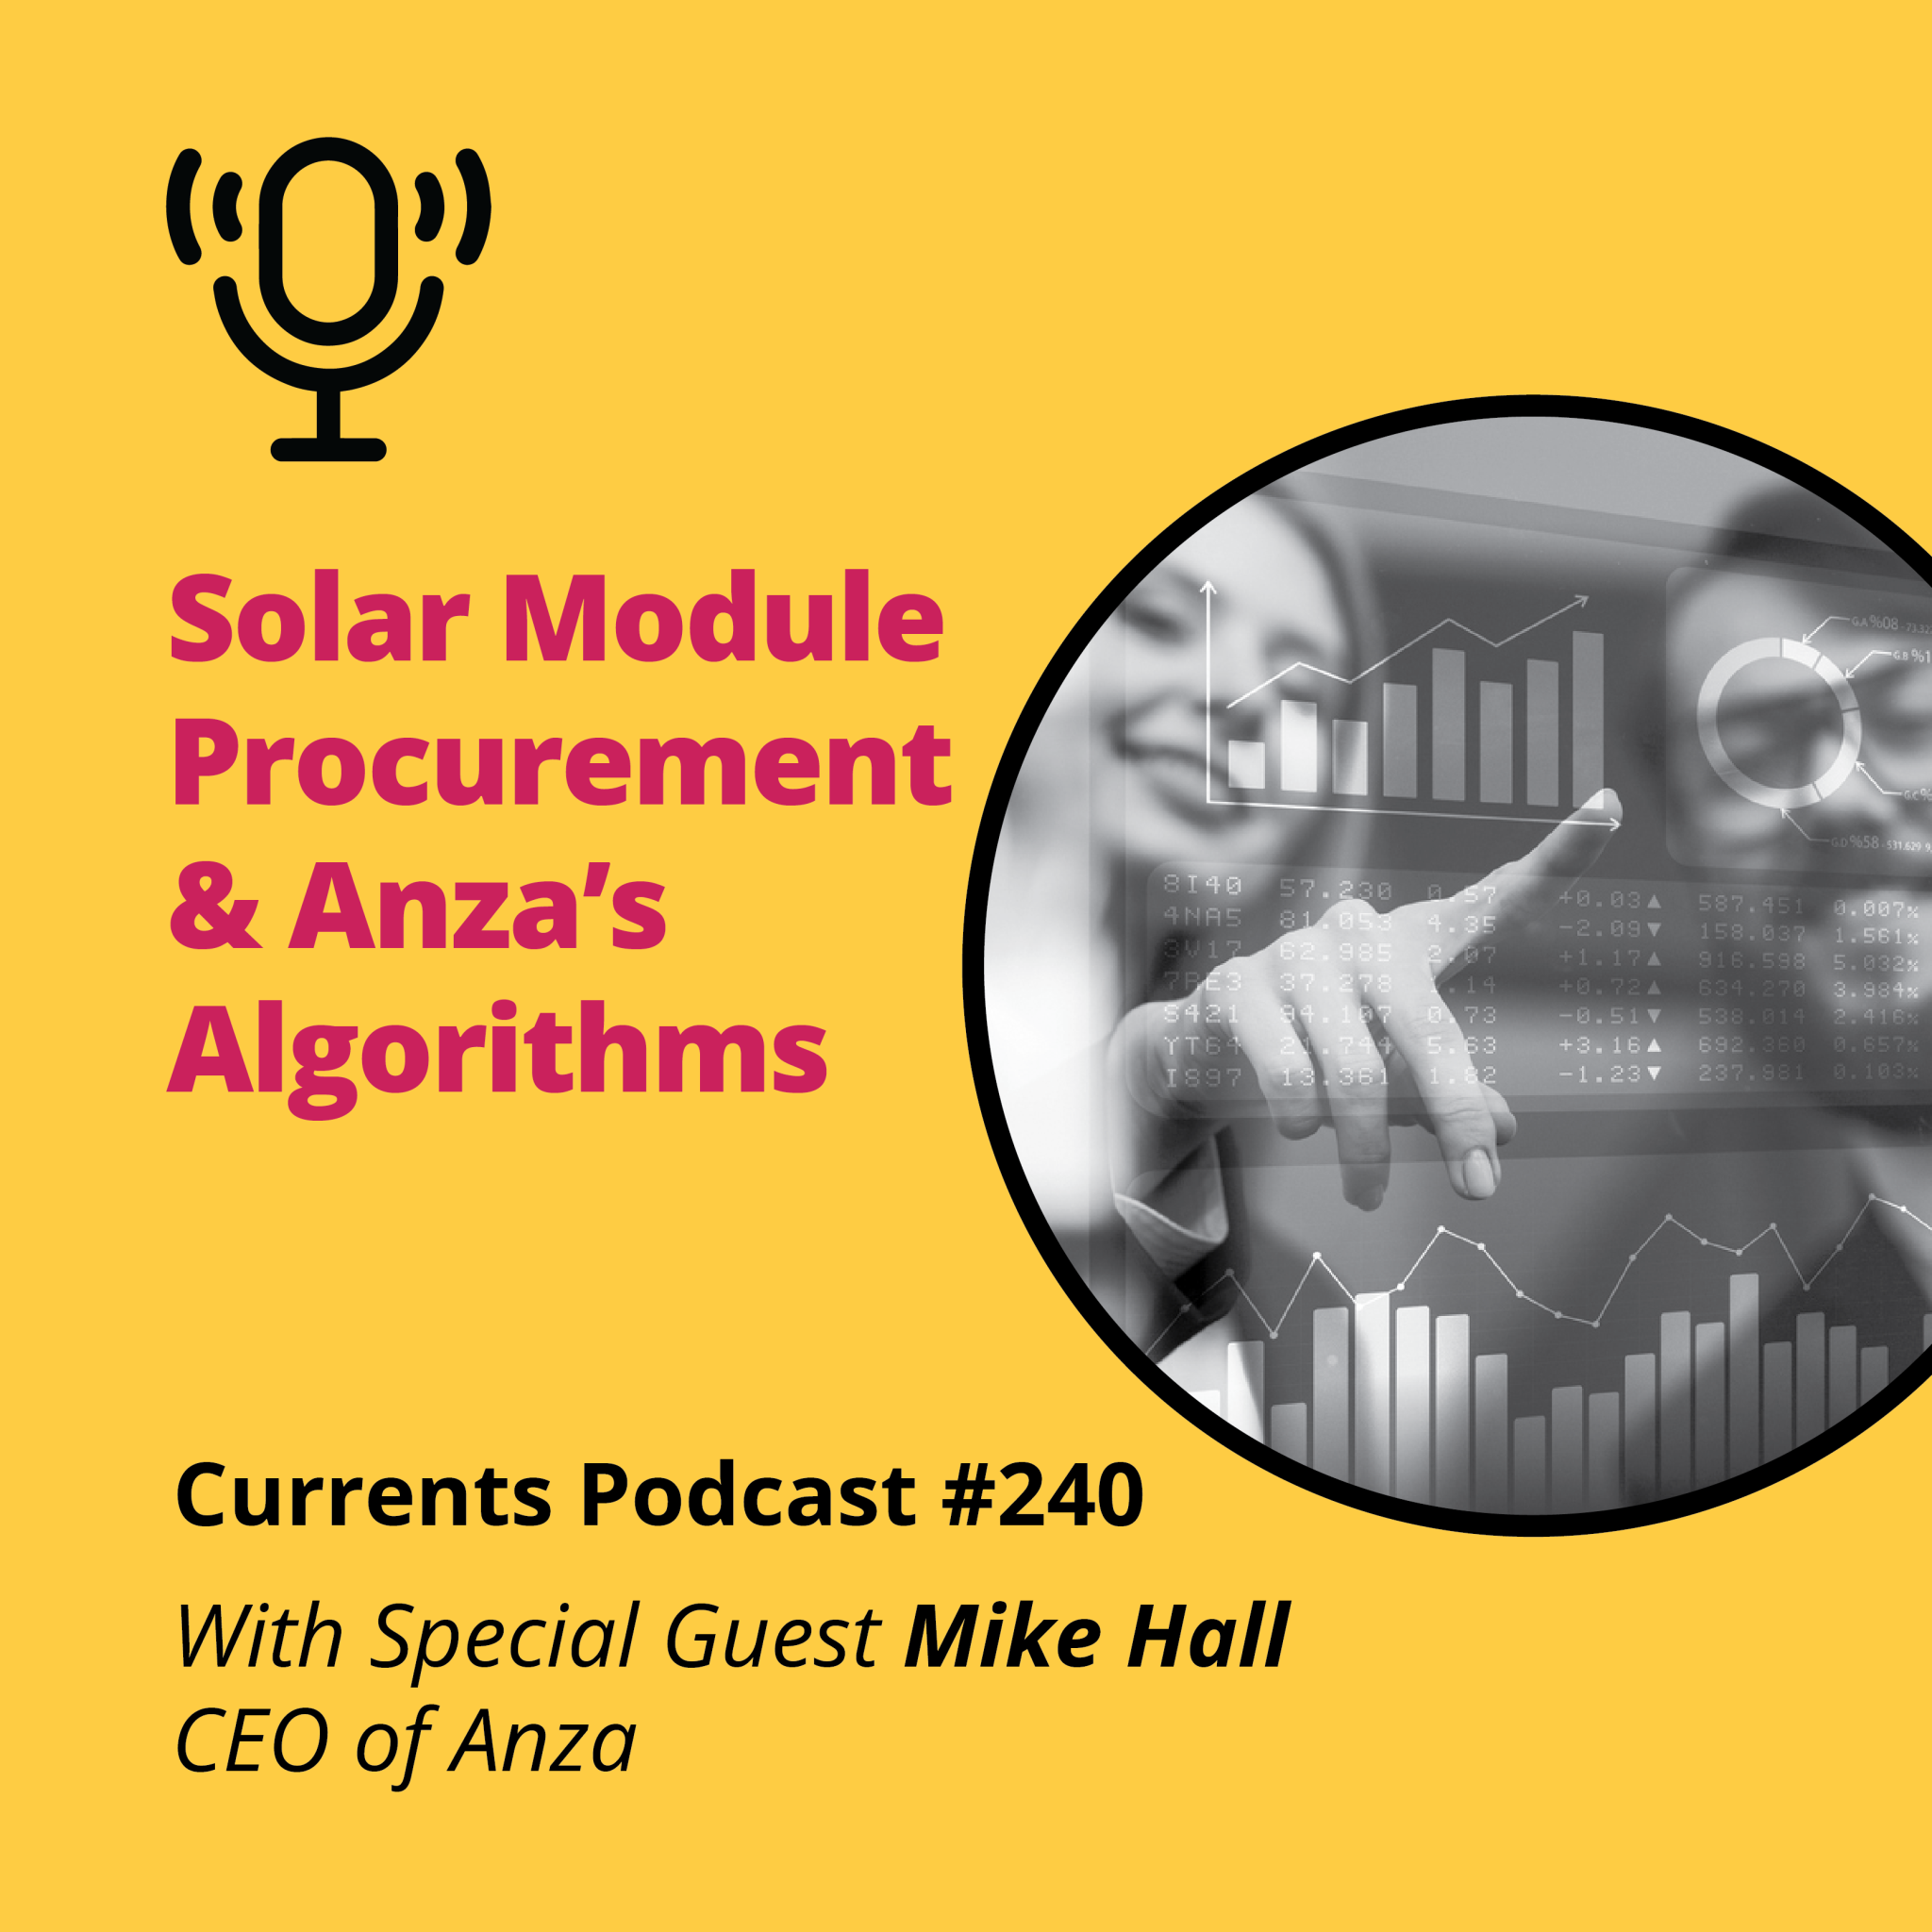 Currents Podcast: Mike Hall on Solar Module Procurement & Anza’s Algorithms